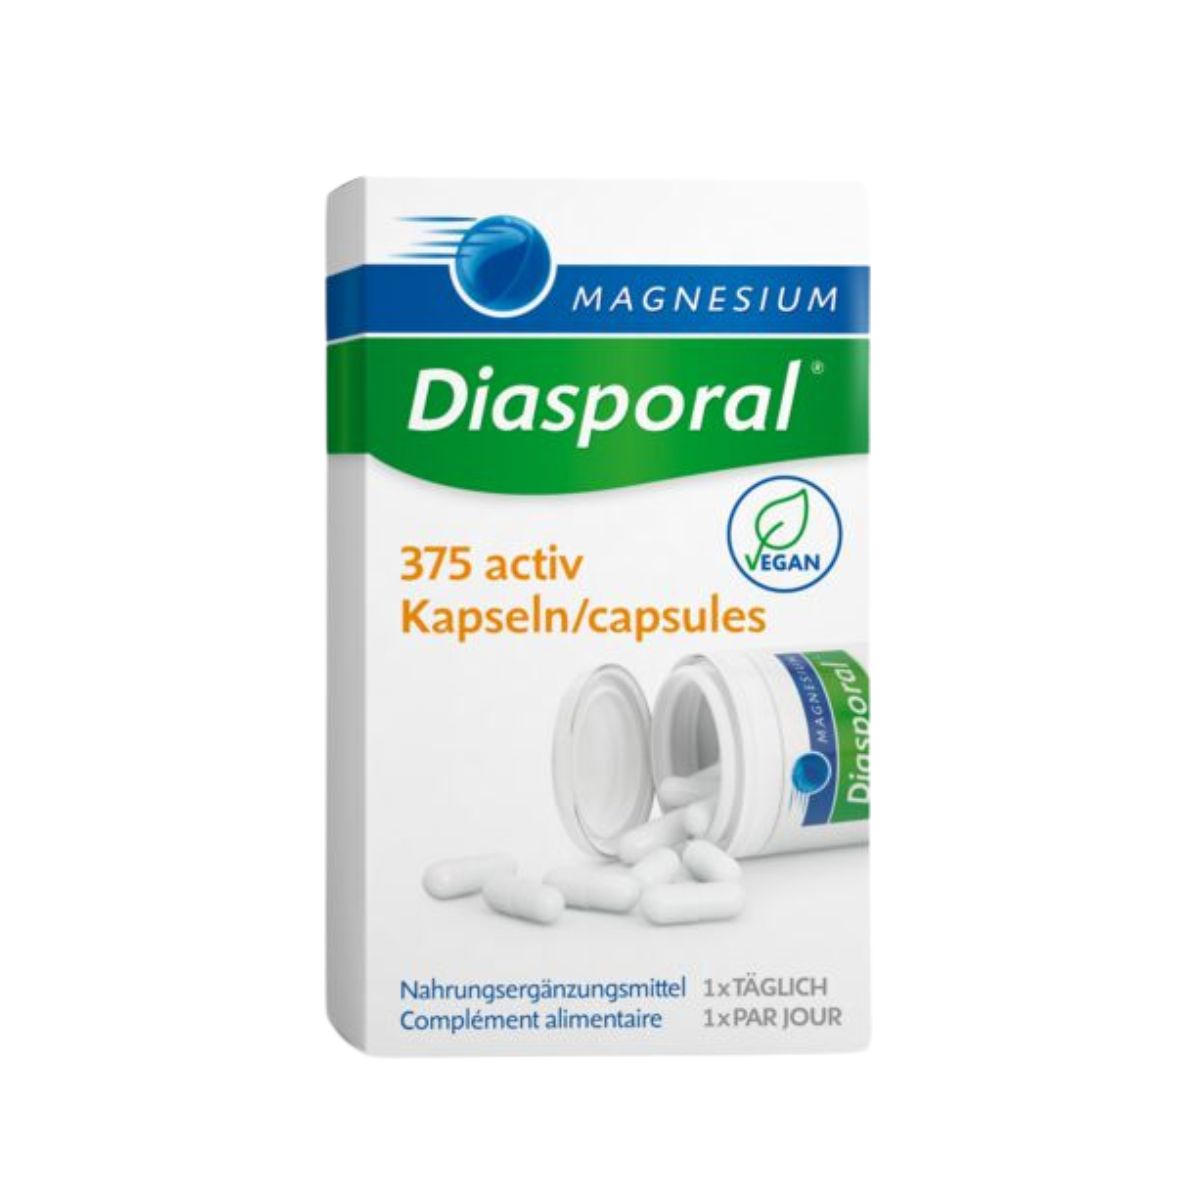 Magnesium Diasporal 375 activ Kapseln vegan